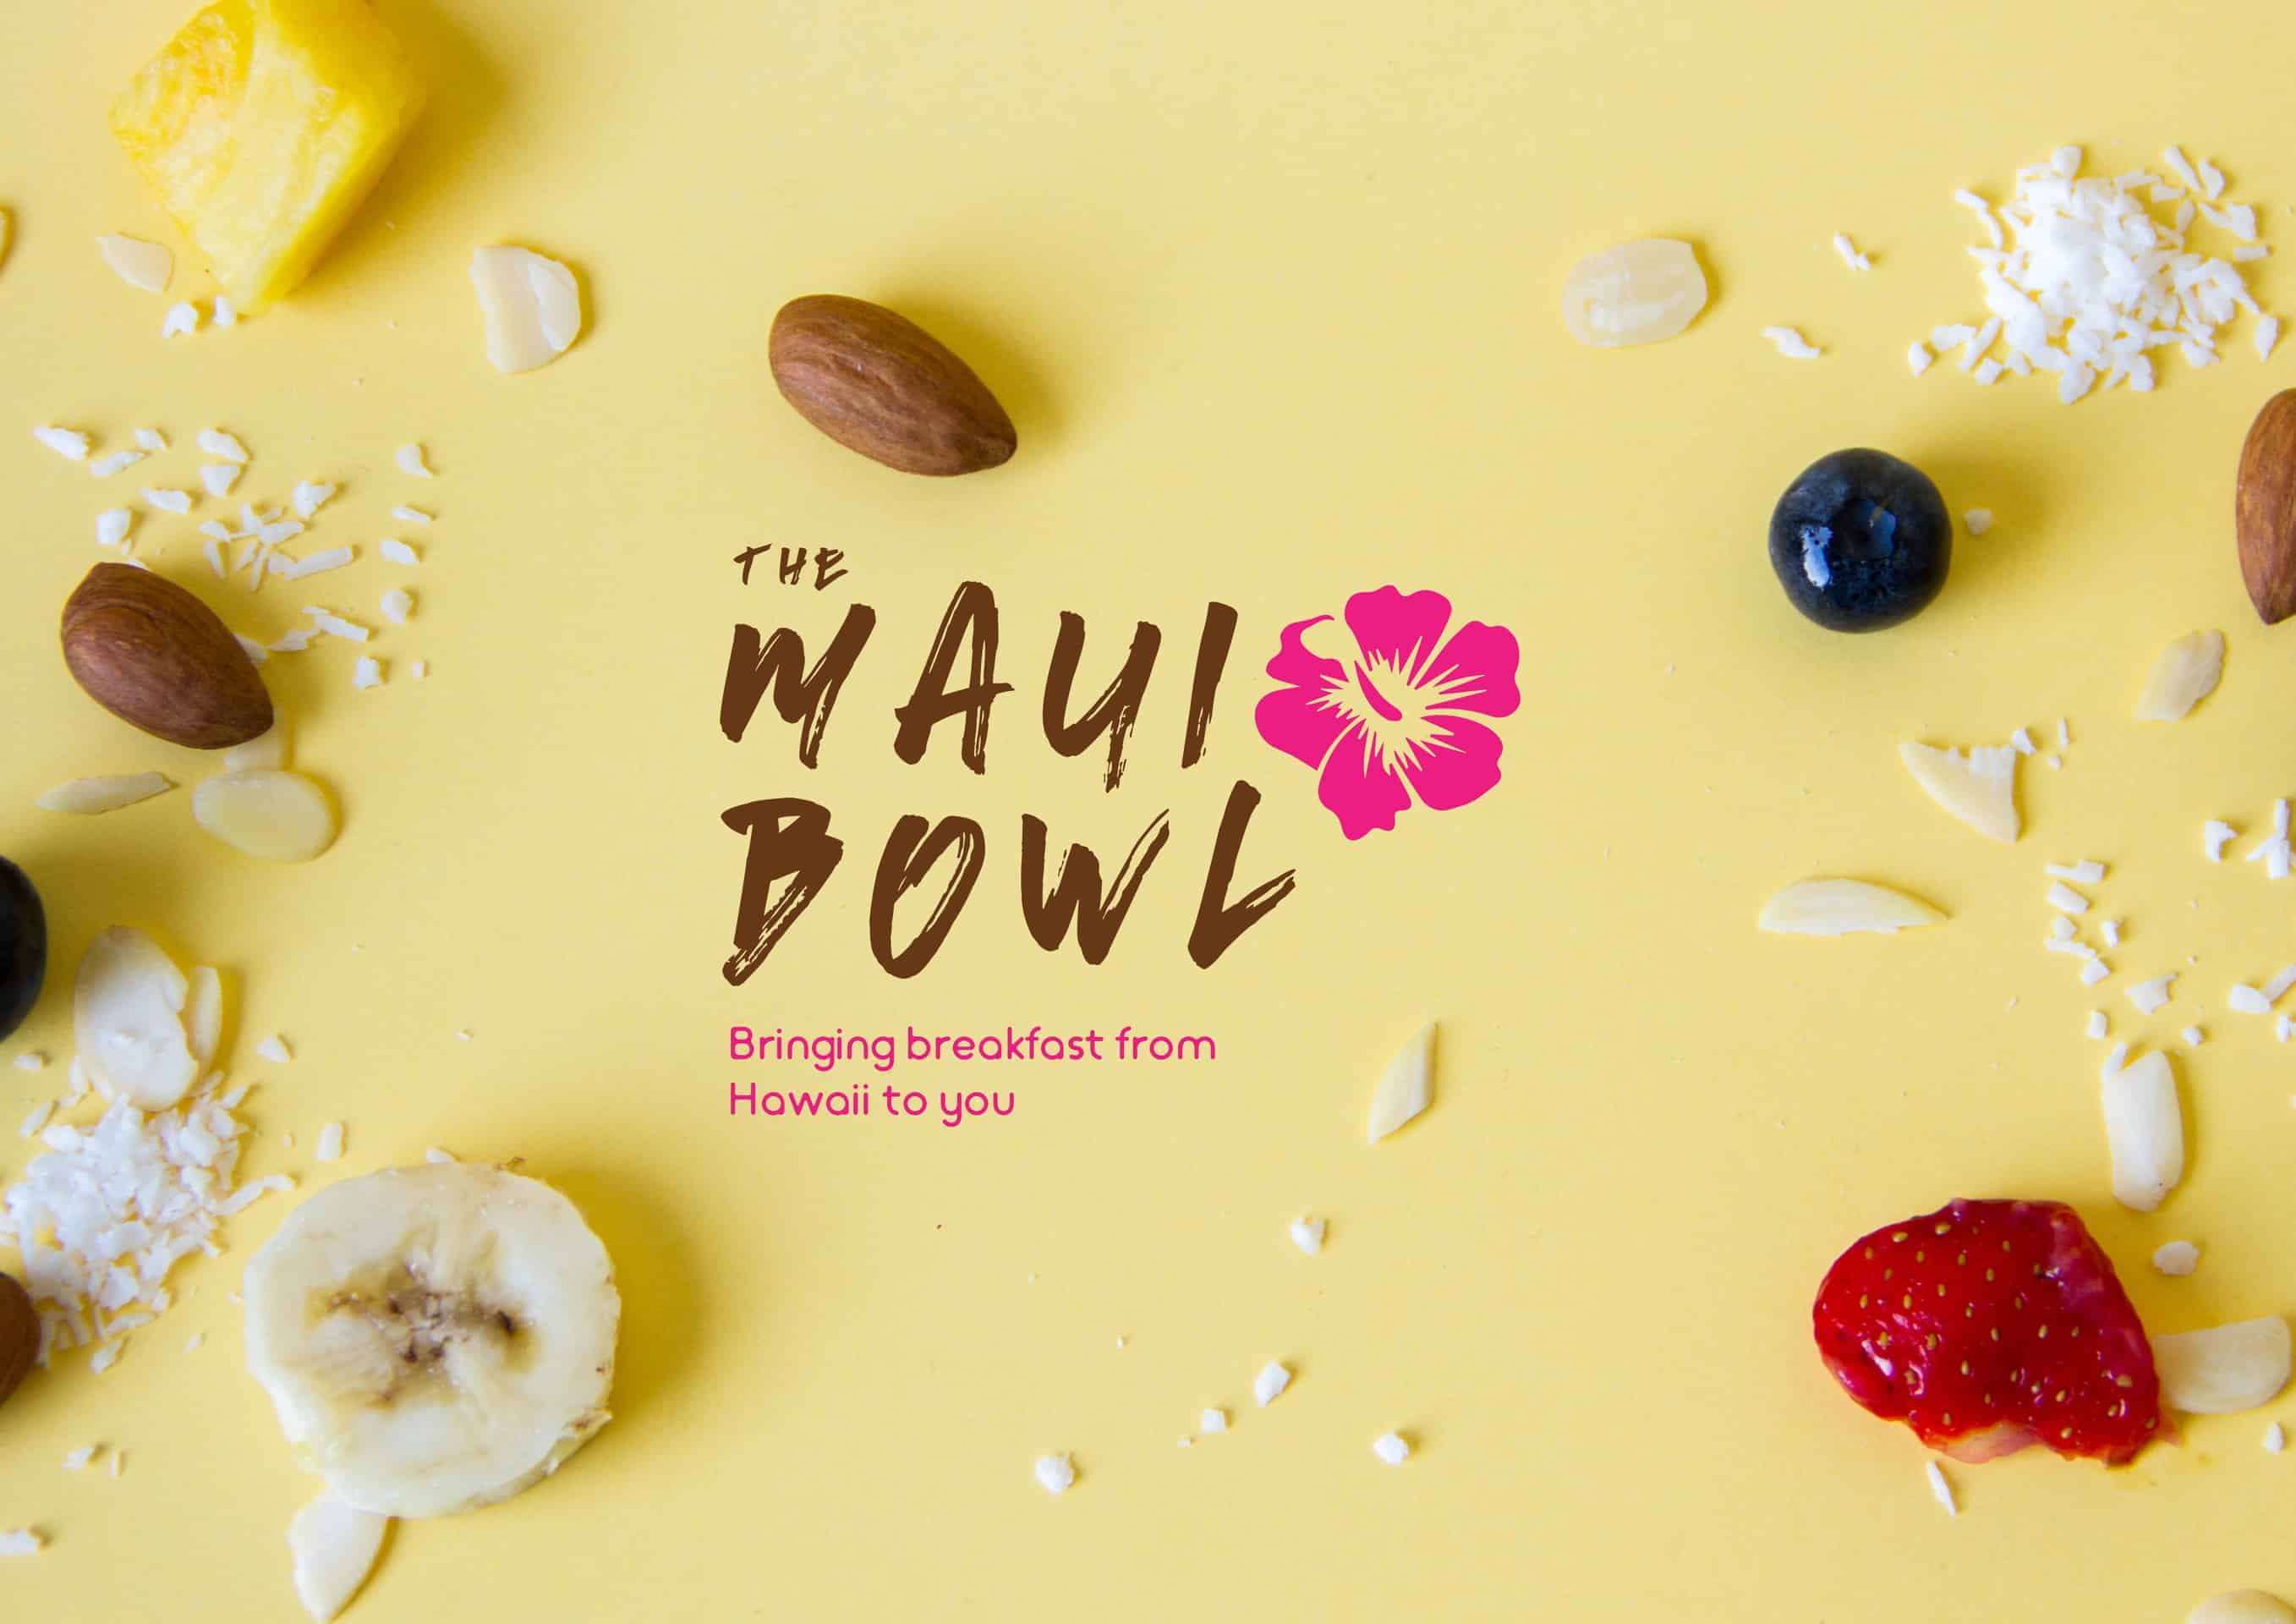 The Maui Bowl